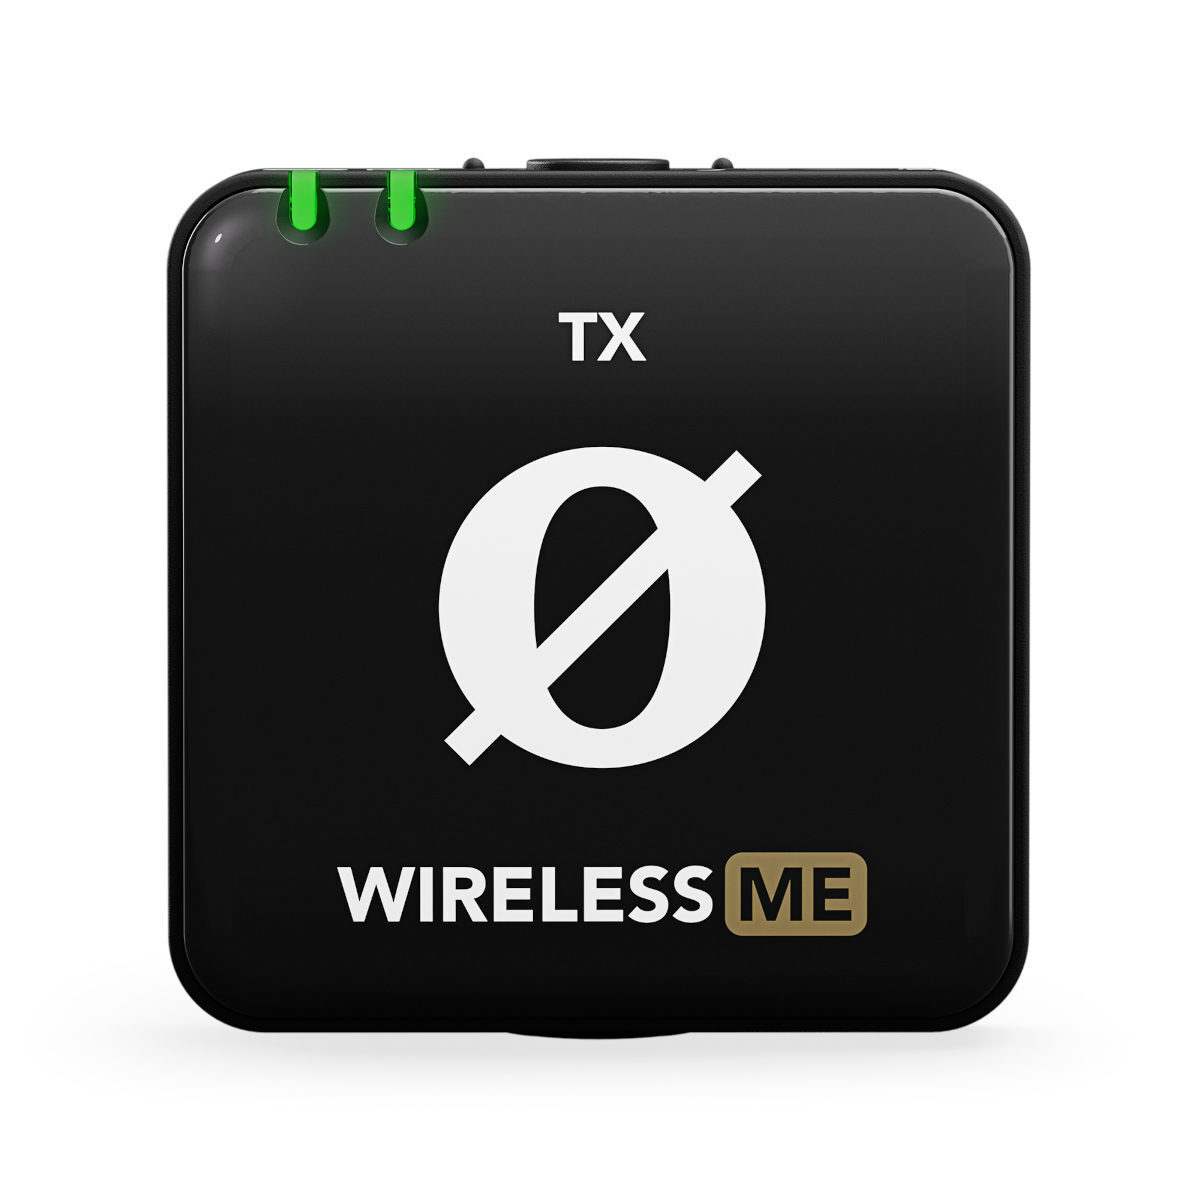 RØDE Wireless ME TX